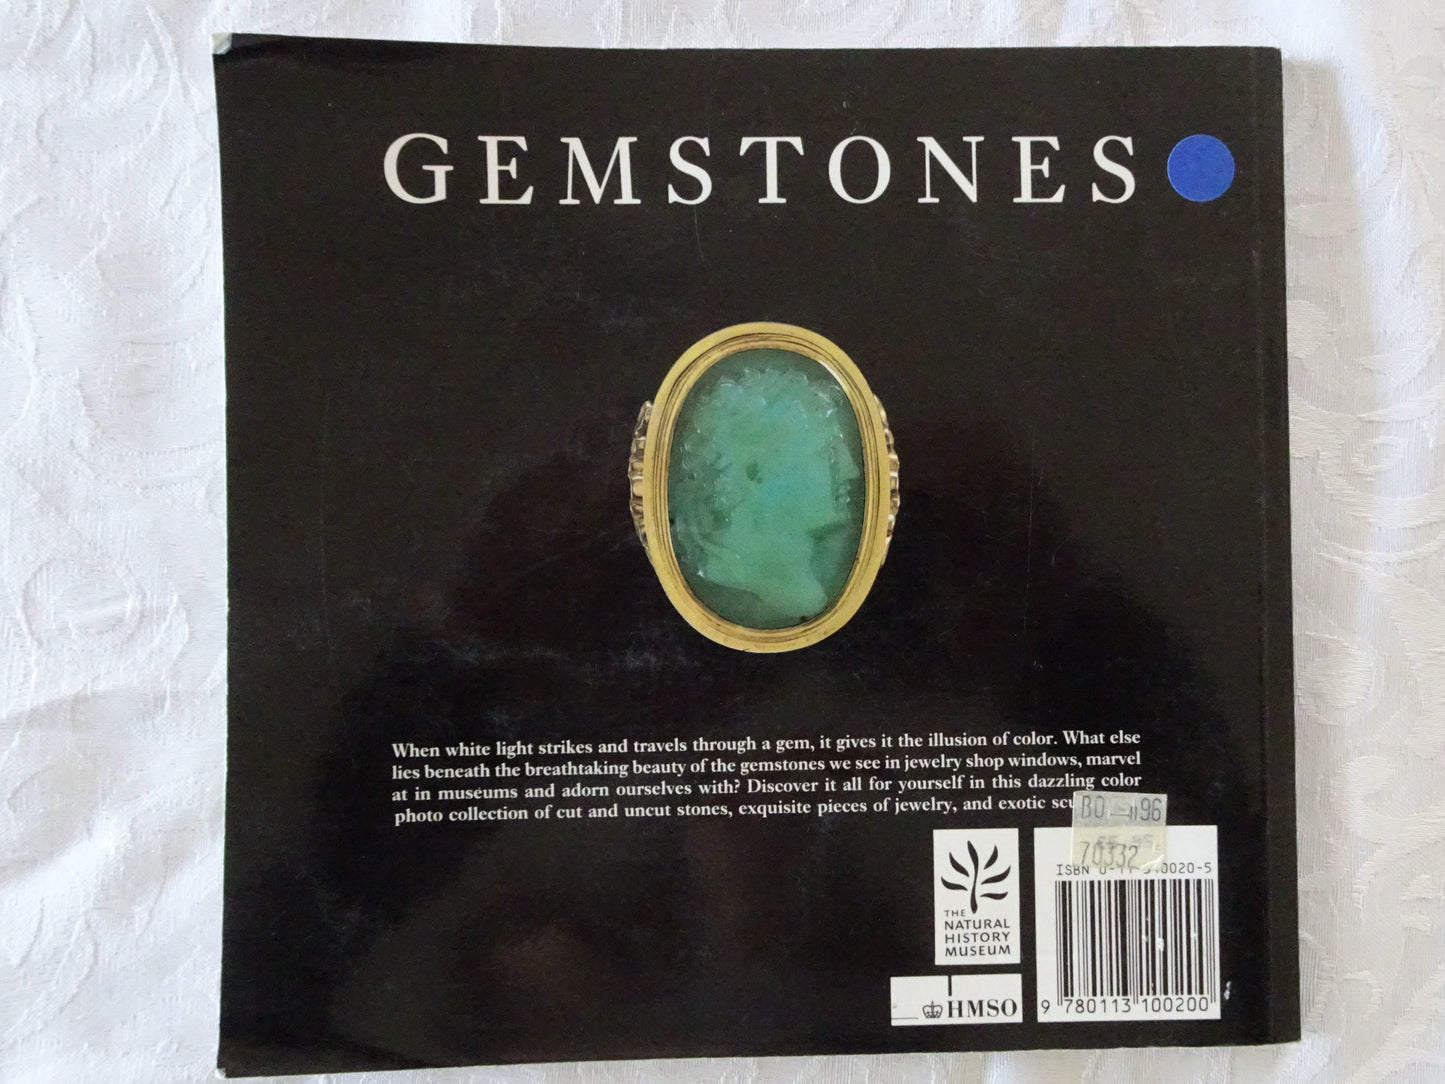 Gemstones by Christine Woodward and Roger Harding